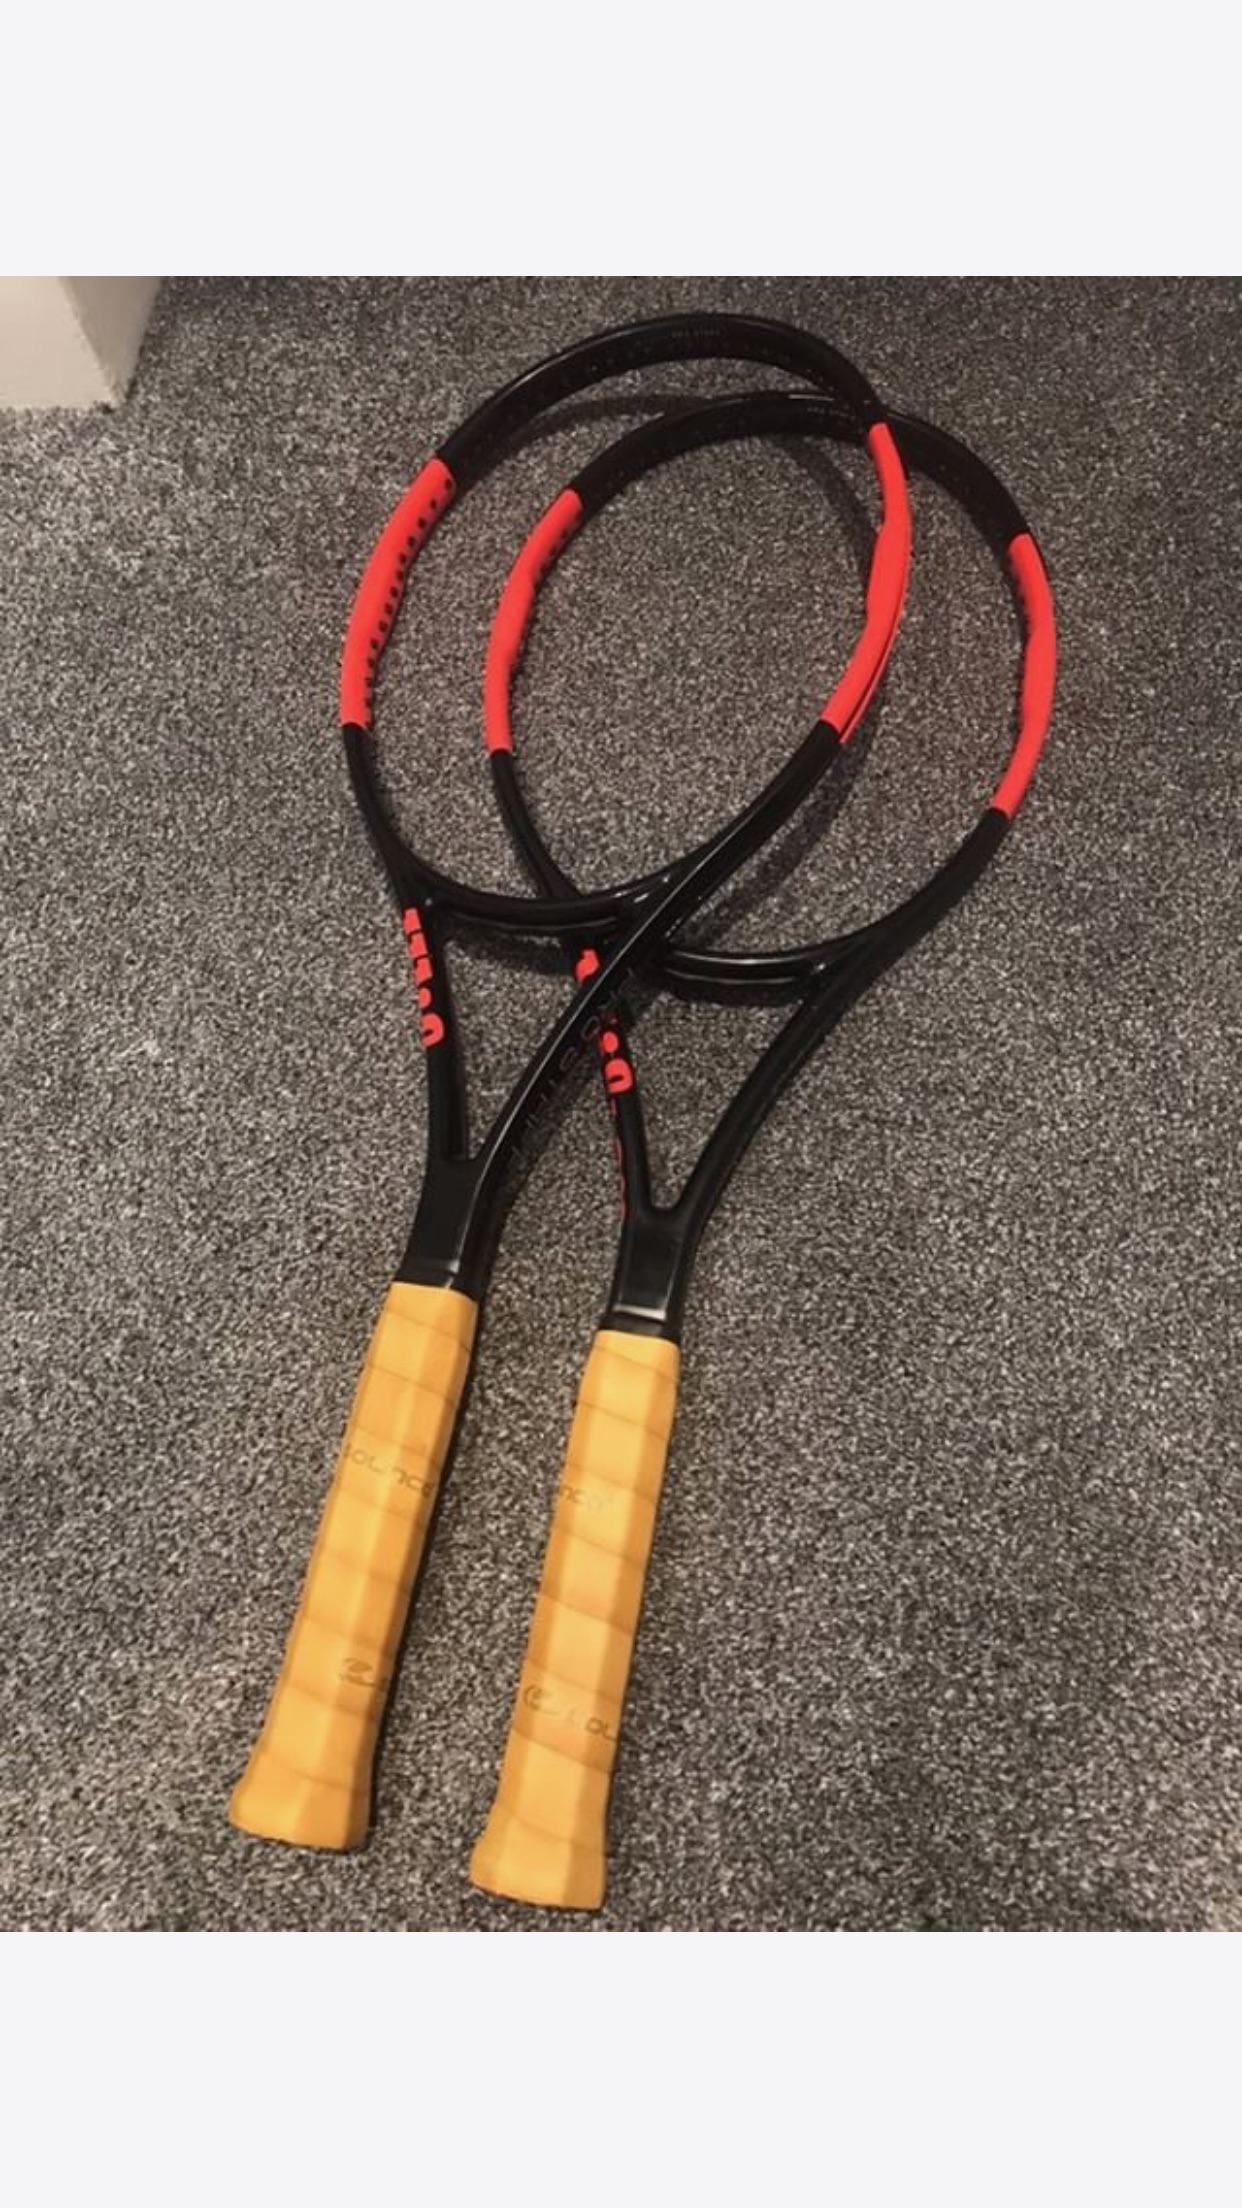 Wilson Six One 95 Racquet Review - Tennis racket review